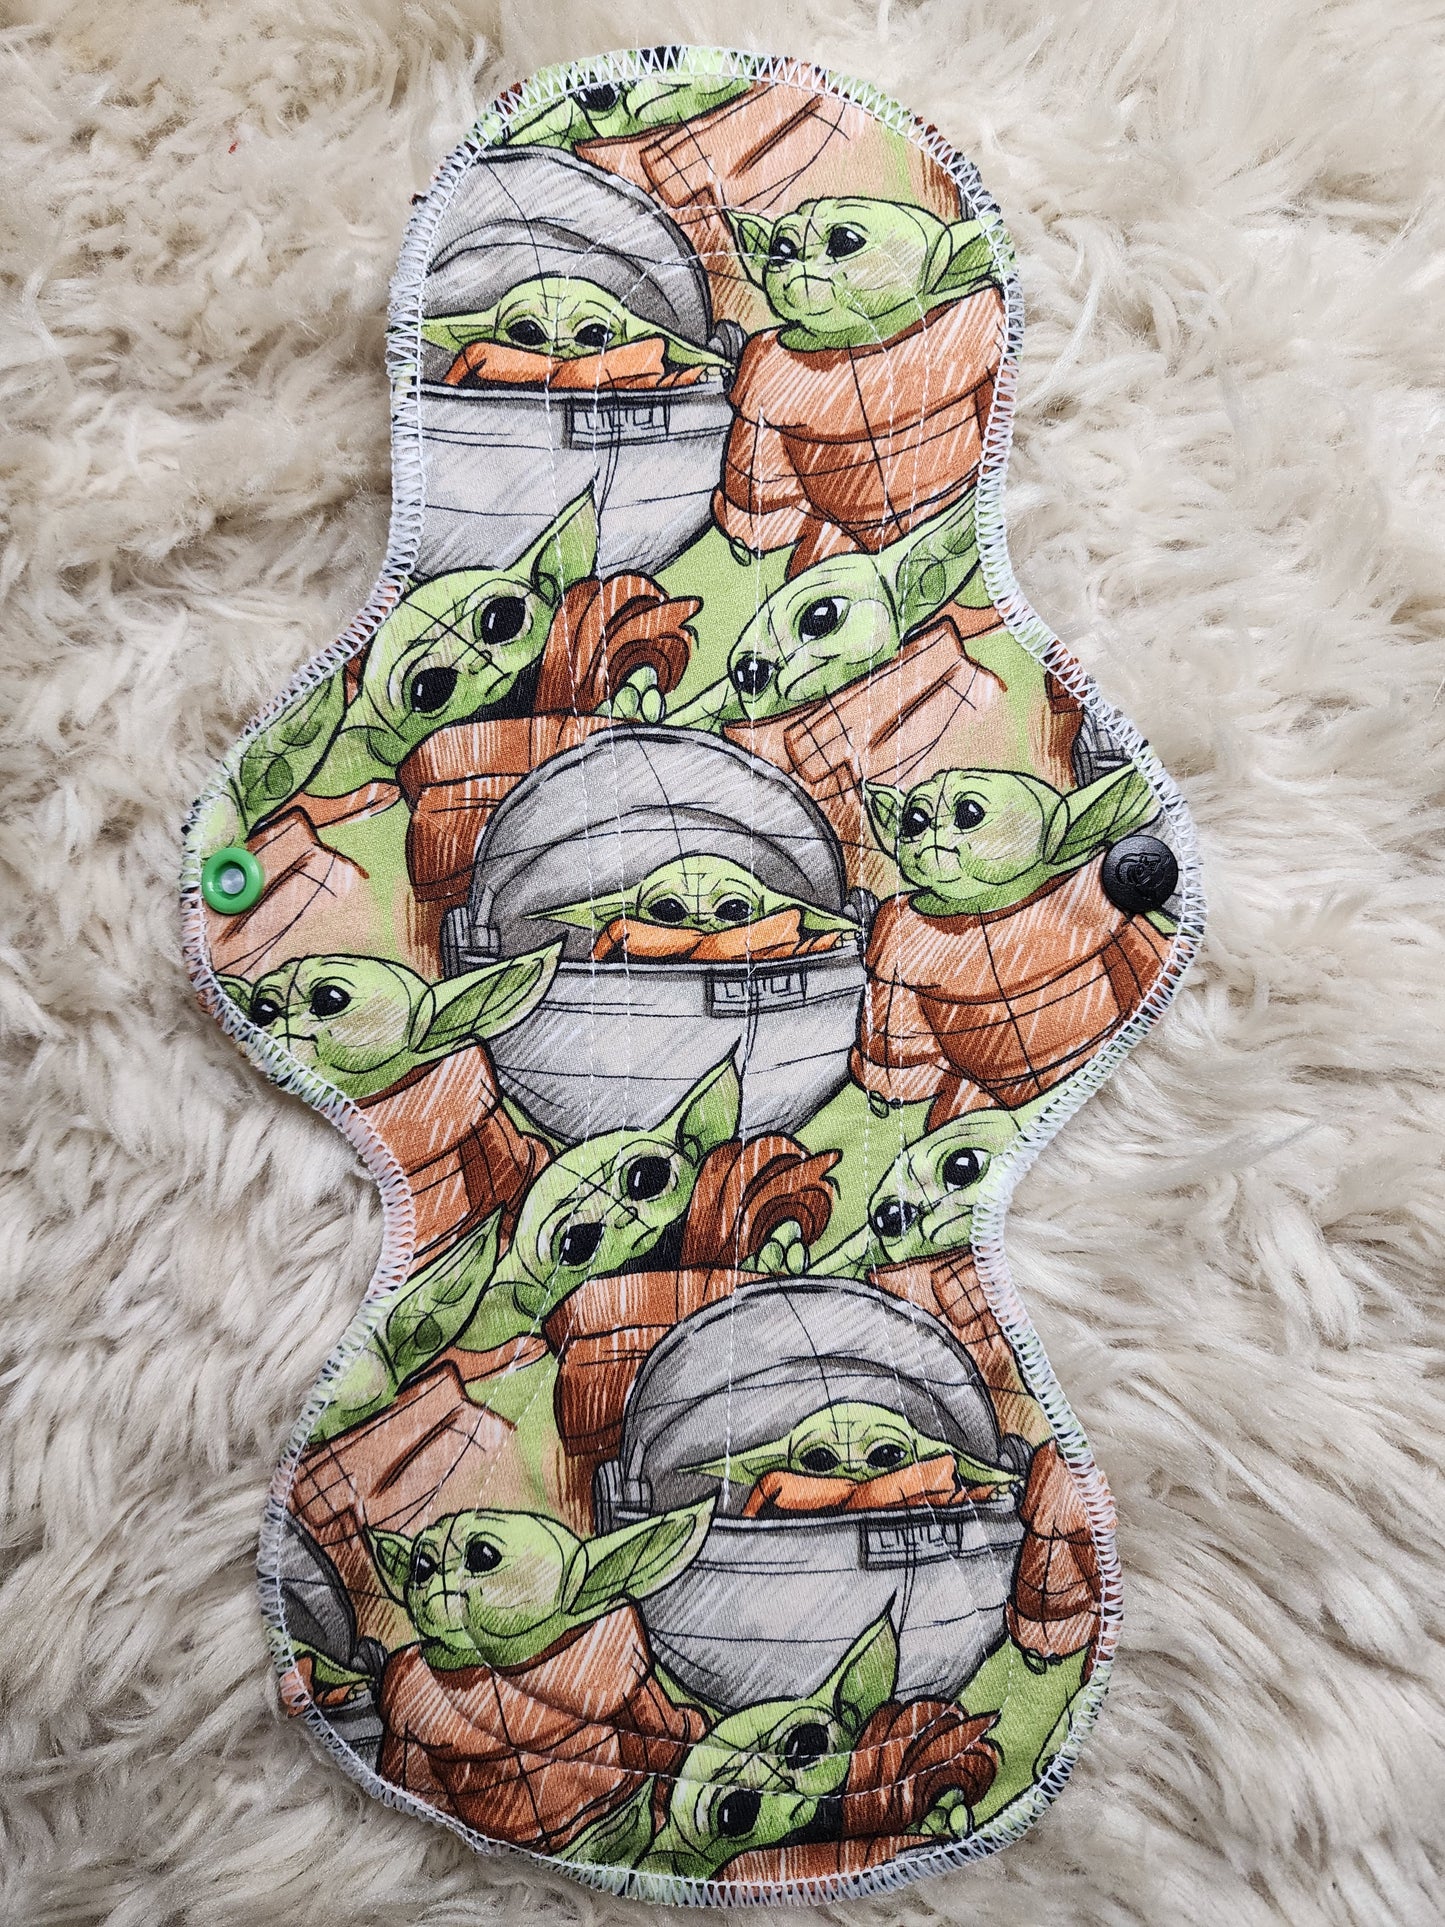 12" Yoda cloth pad